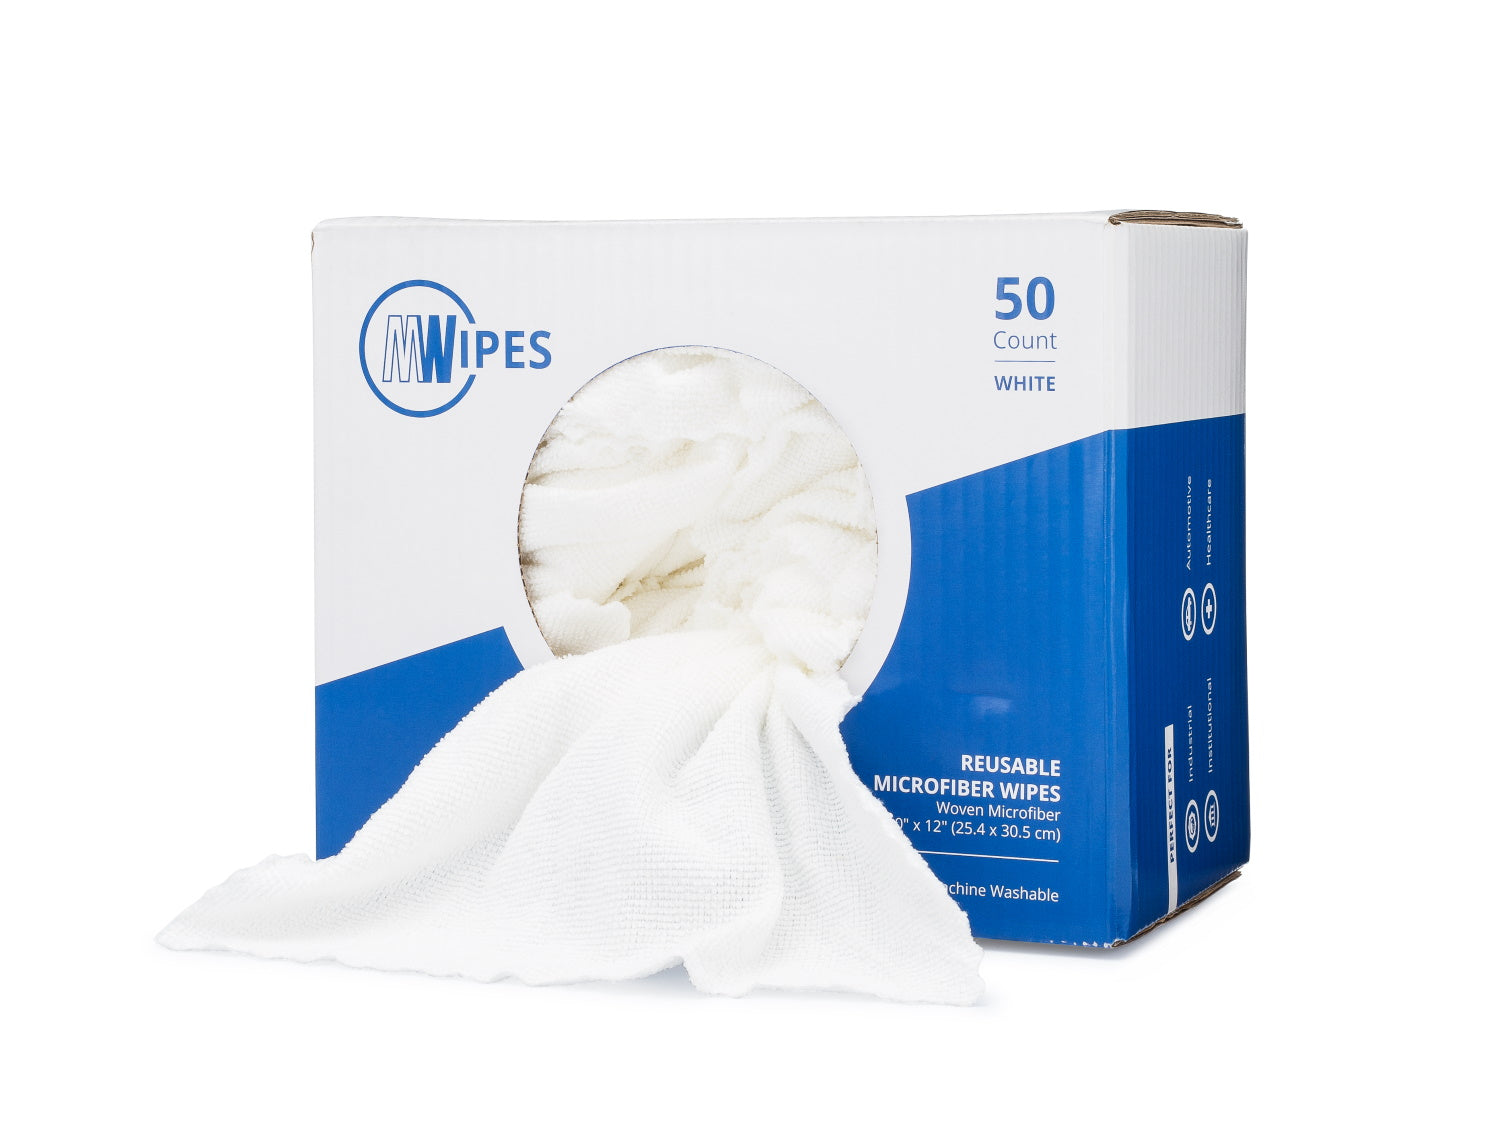 Disposable Microfiber Wipes vs Paper Towels